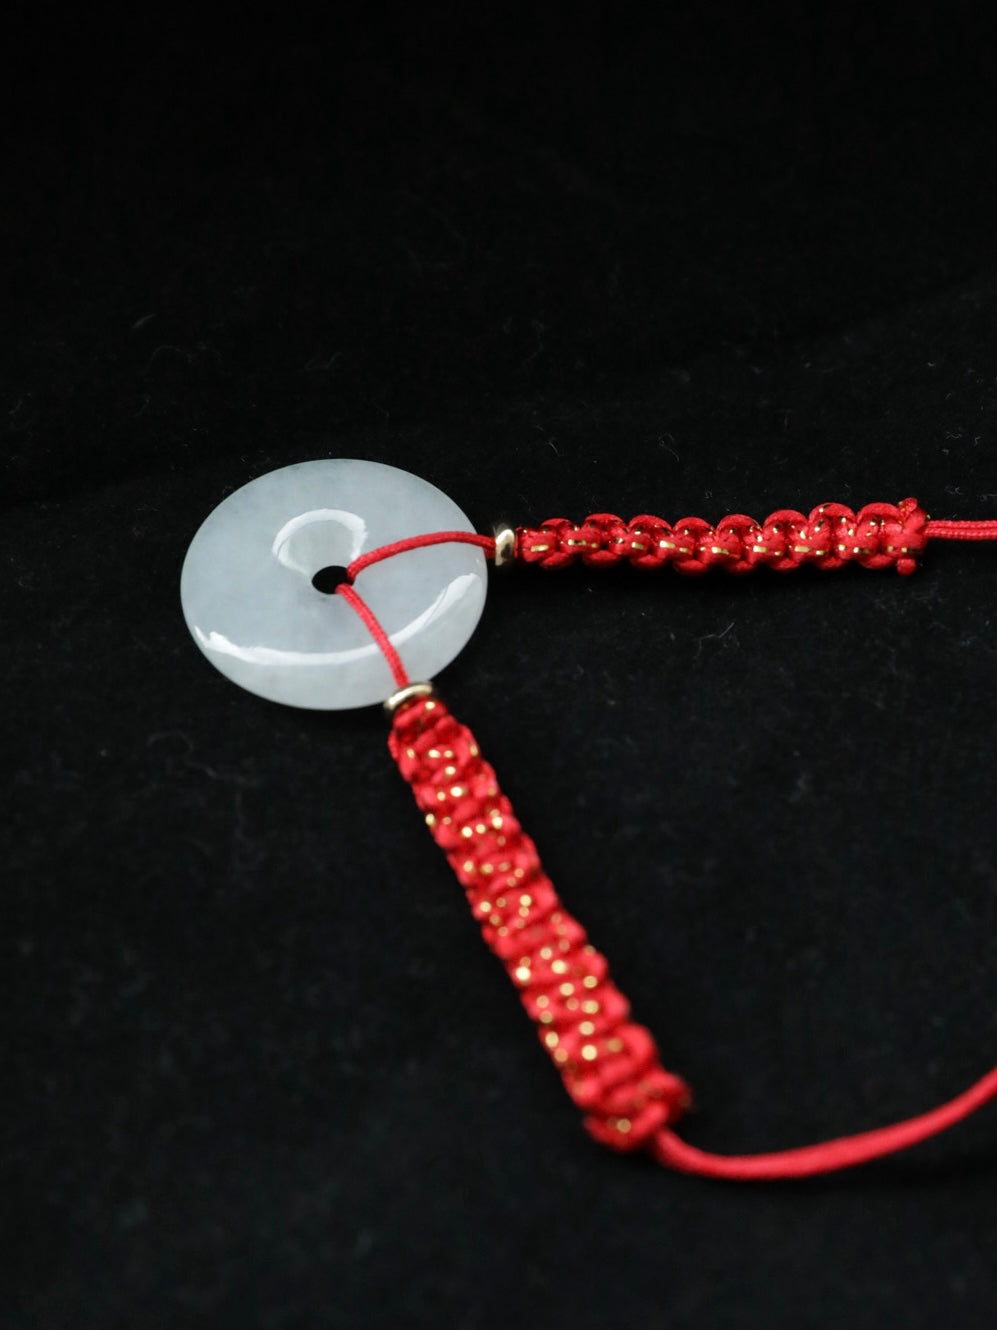 Fortune's Thread Bracelet